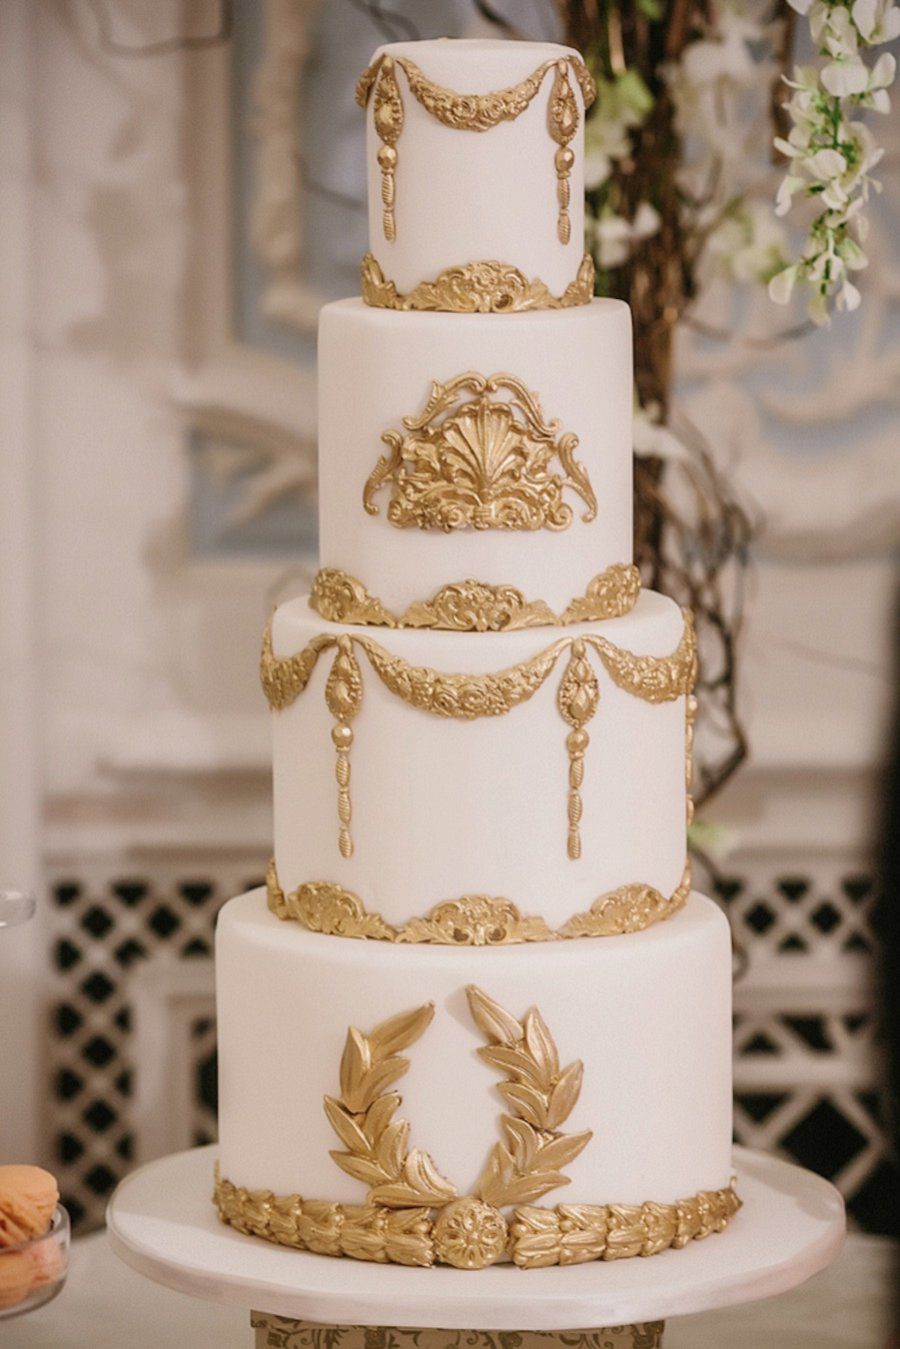 How To Choose a Wedding Cake Design – LDS Wedding Receptions